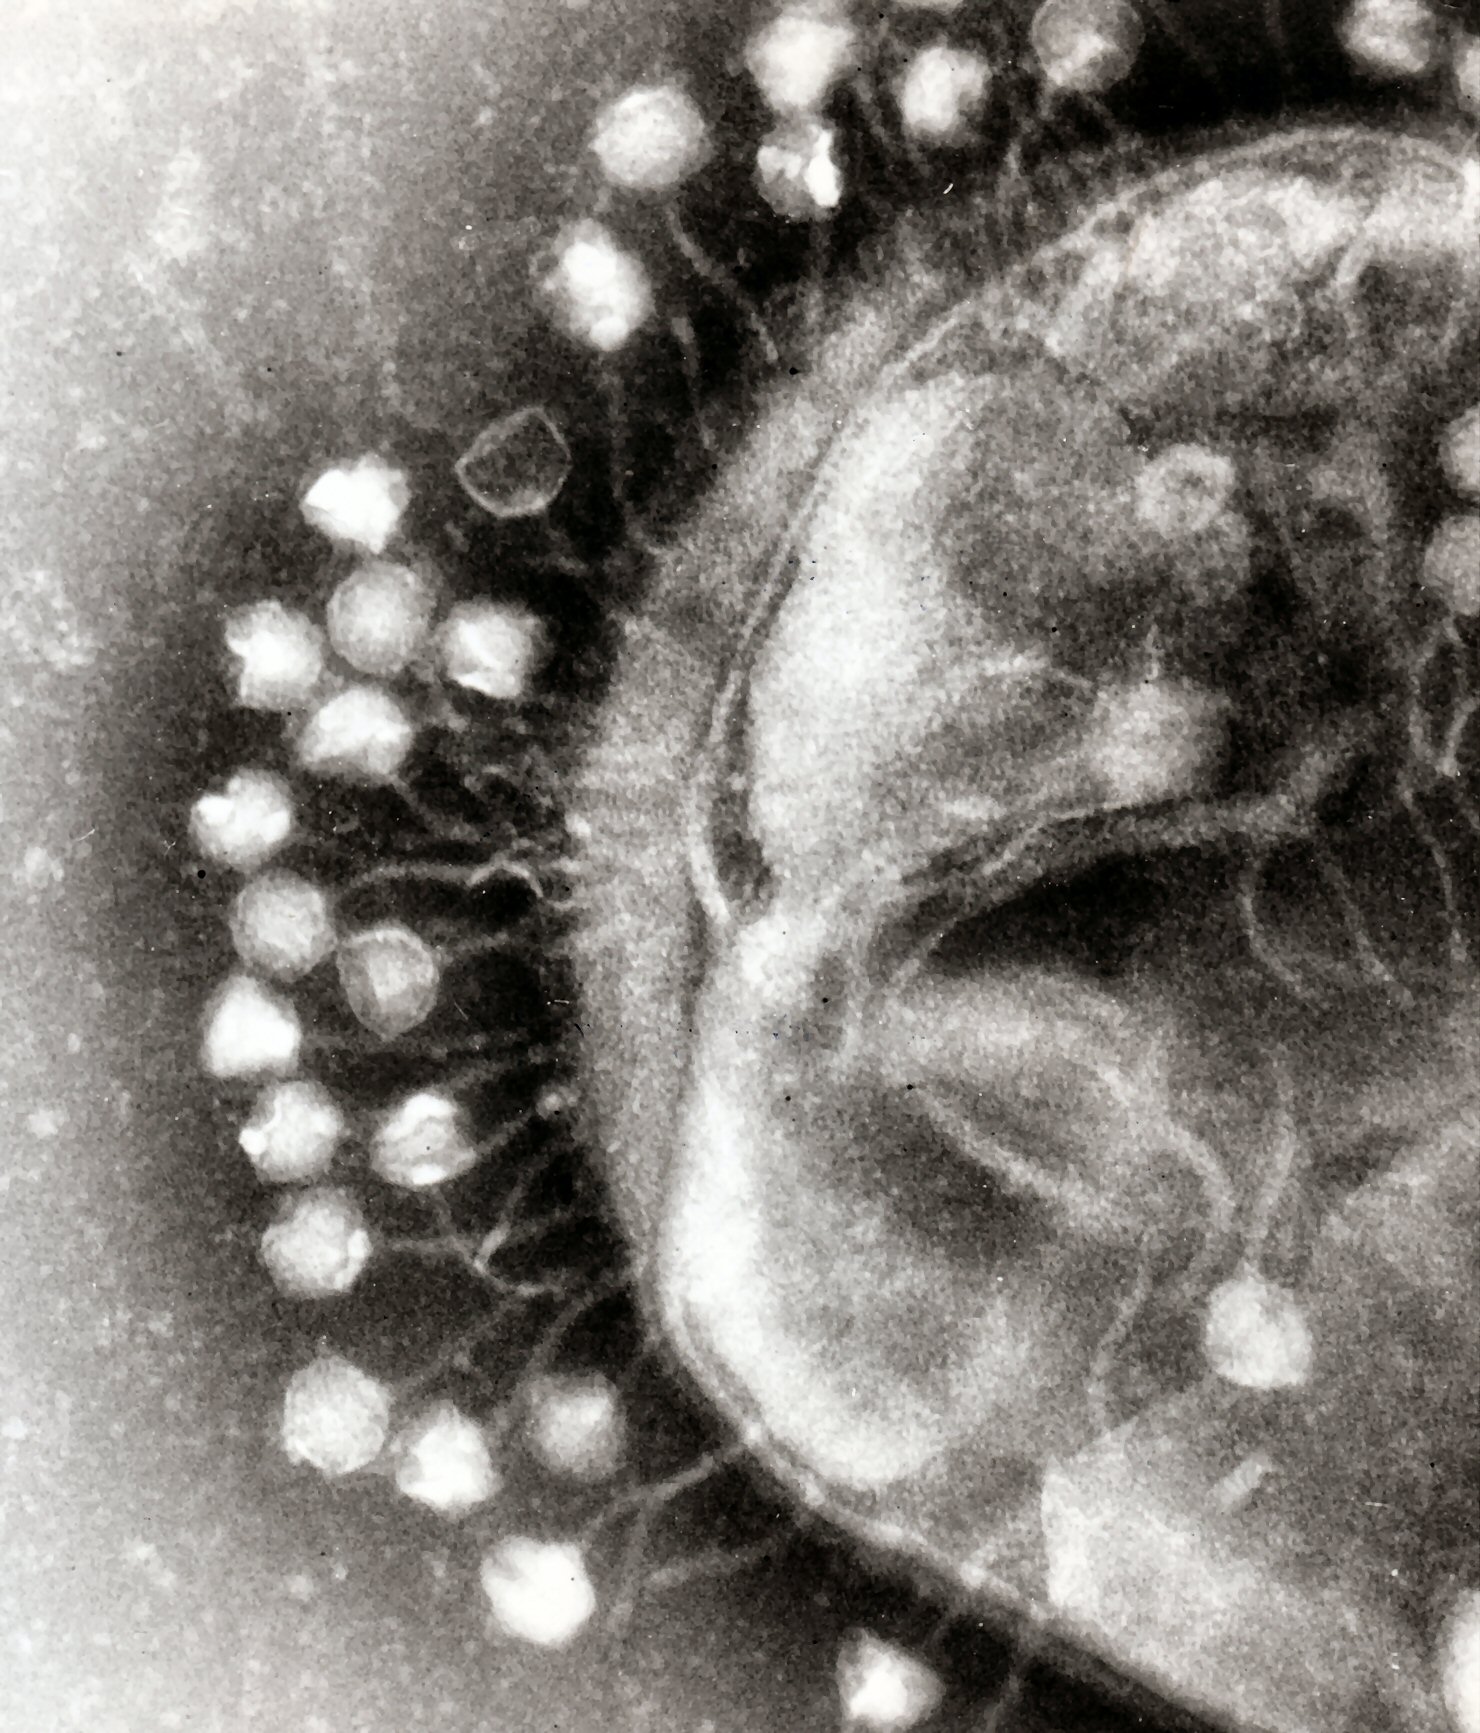 Un bacteriófago atacando la bacteria Escherichia coli. Imagen: Graham Beards